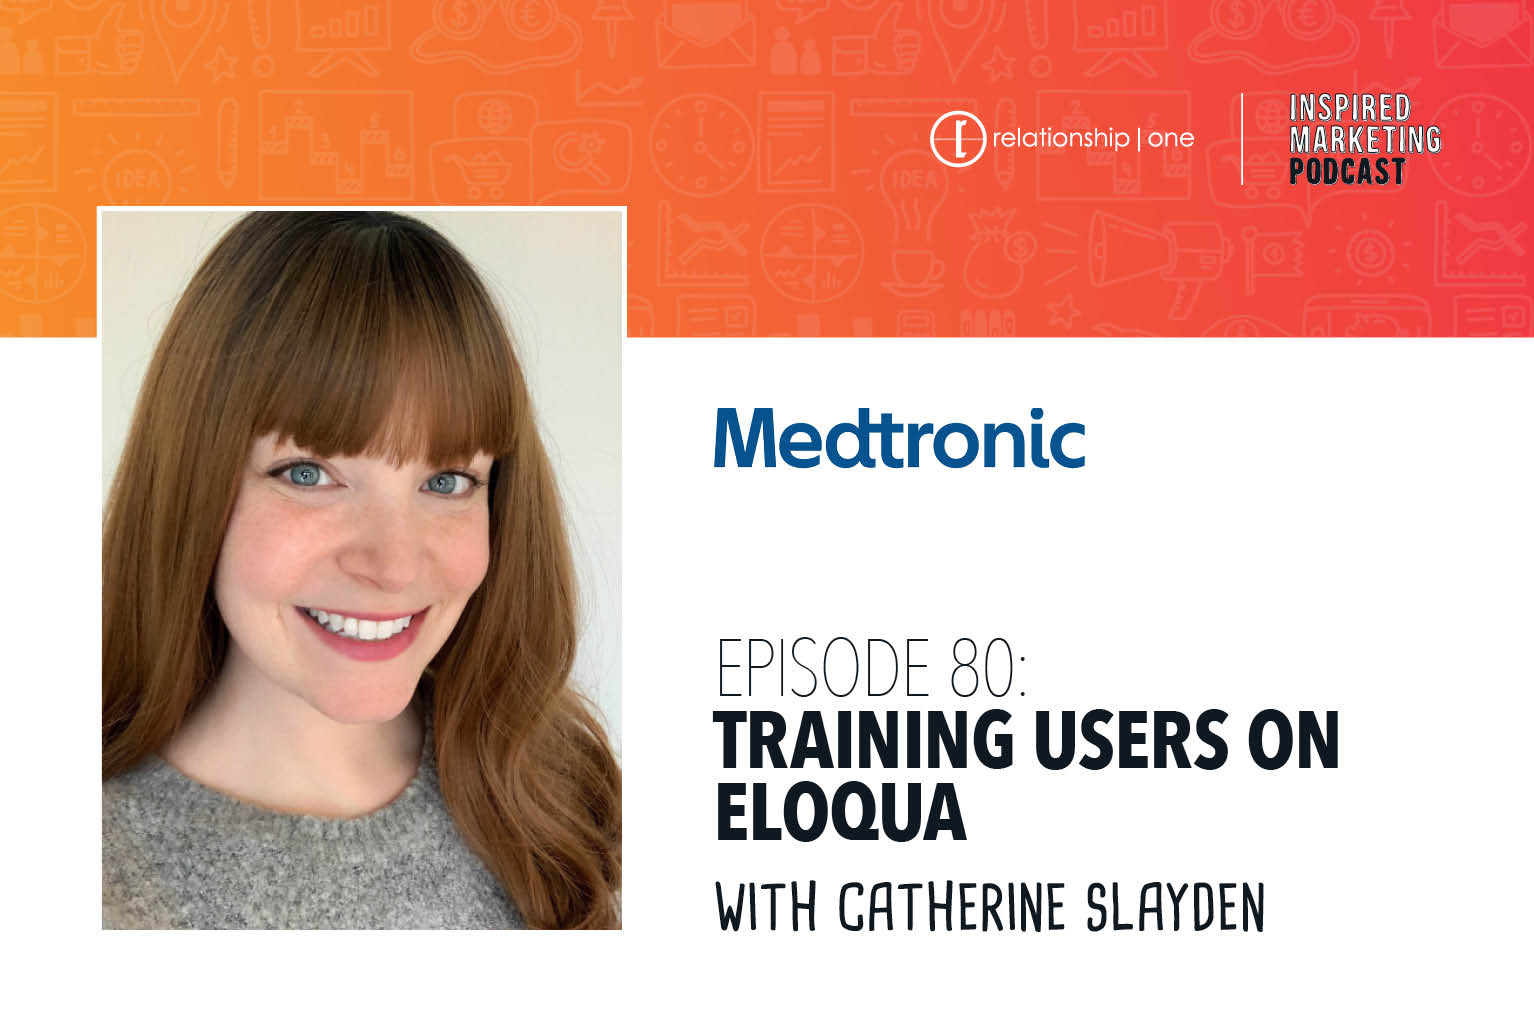 Inspired Marketing: Medtronic’s Catherine Slayden on Training Users on Eloqua